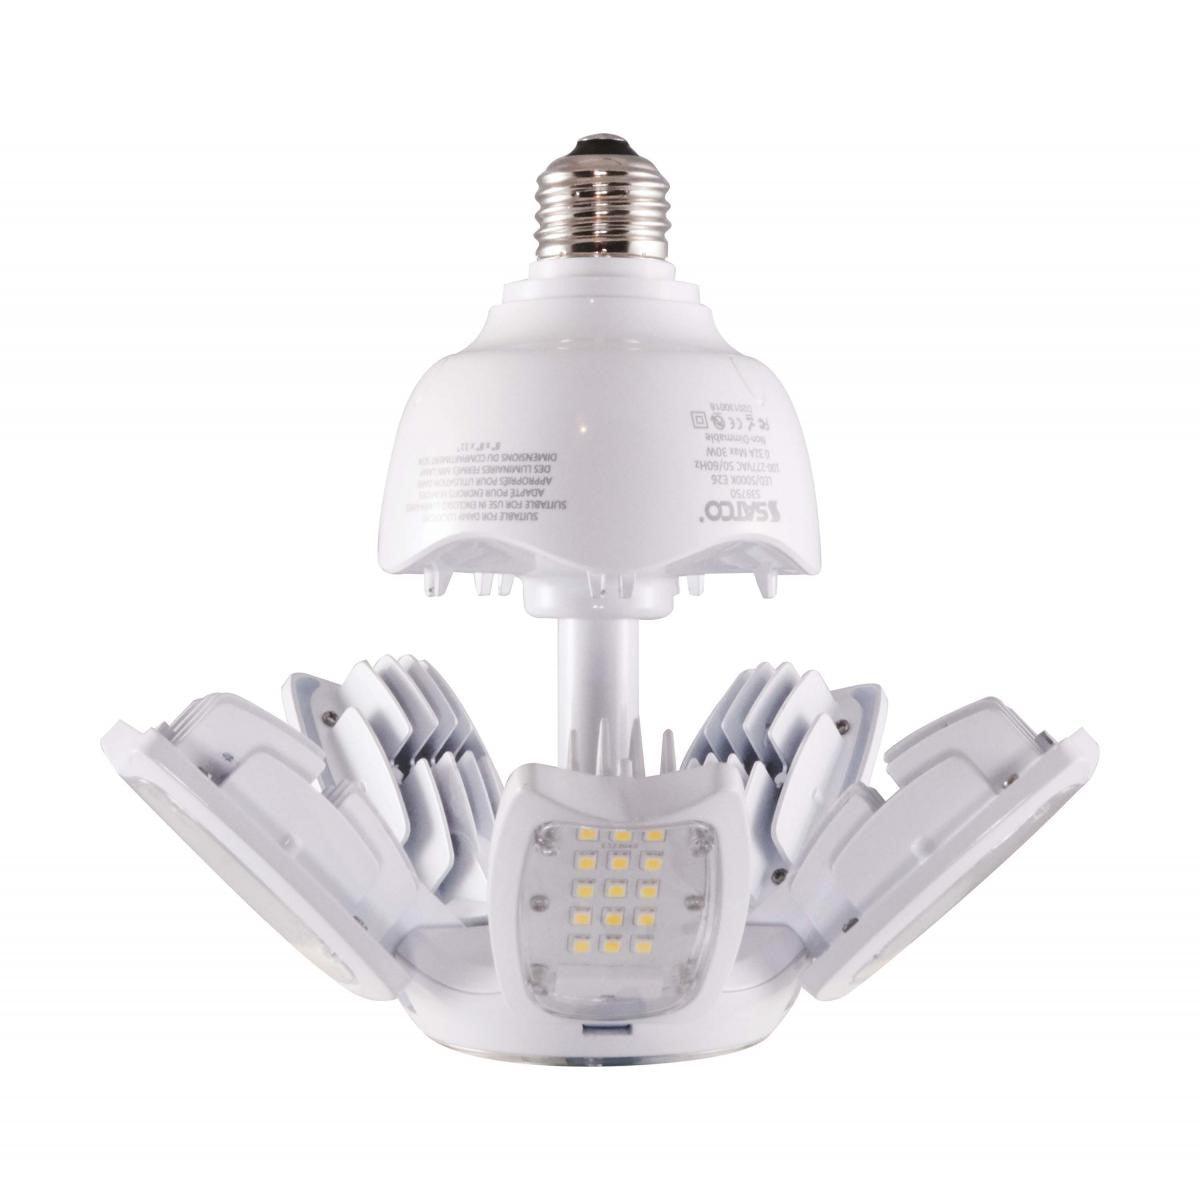 LED Deformable Retrofit Lamp, 30W, 4200 Lumens, 5000K, E26 Mogul Base, 120-277V